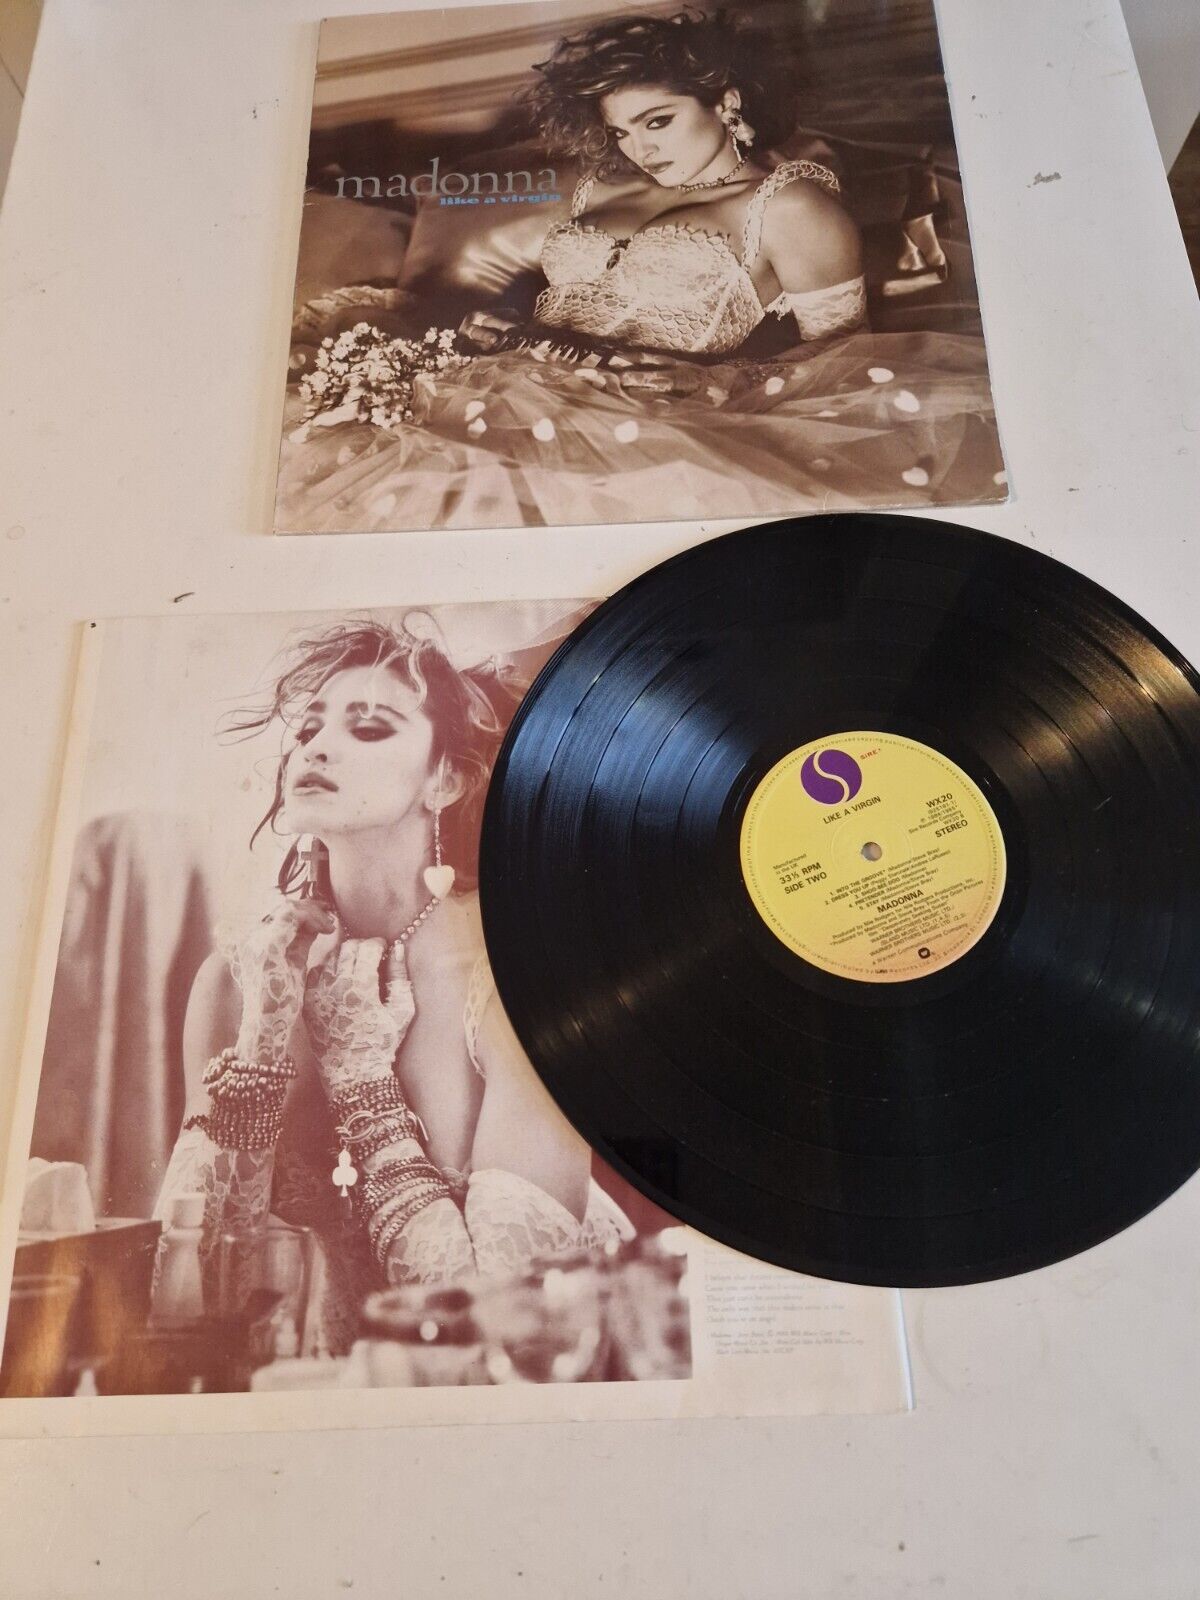 Madonna  like A Virgin 1984 Vinyl Sire Records Album Material Girl with lyrics